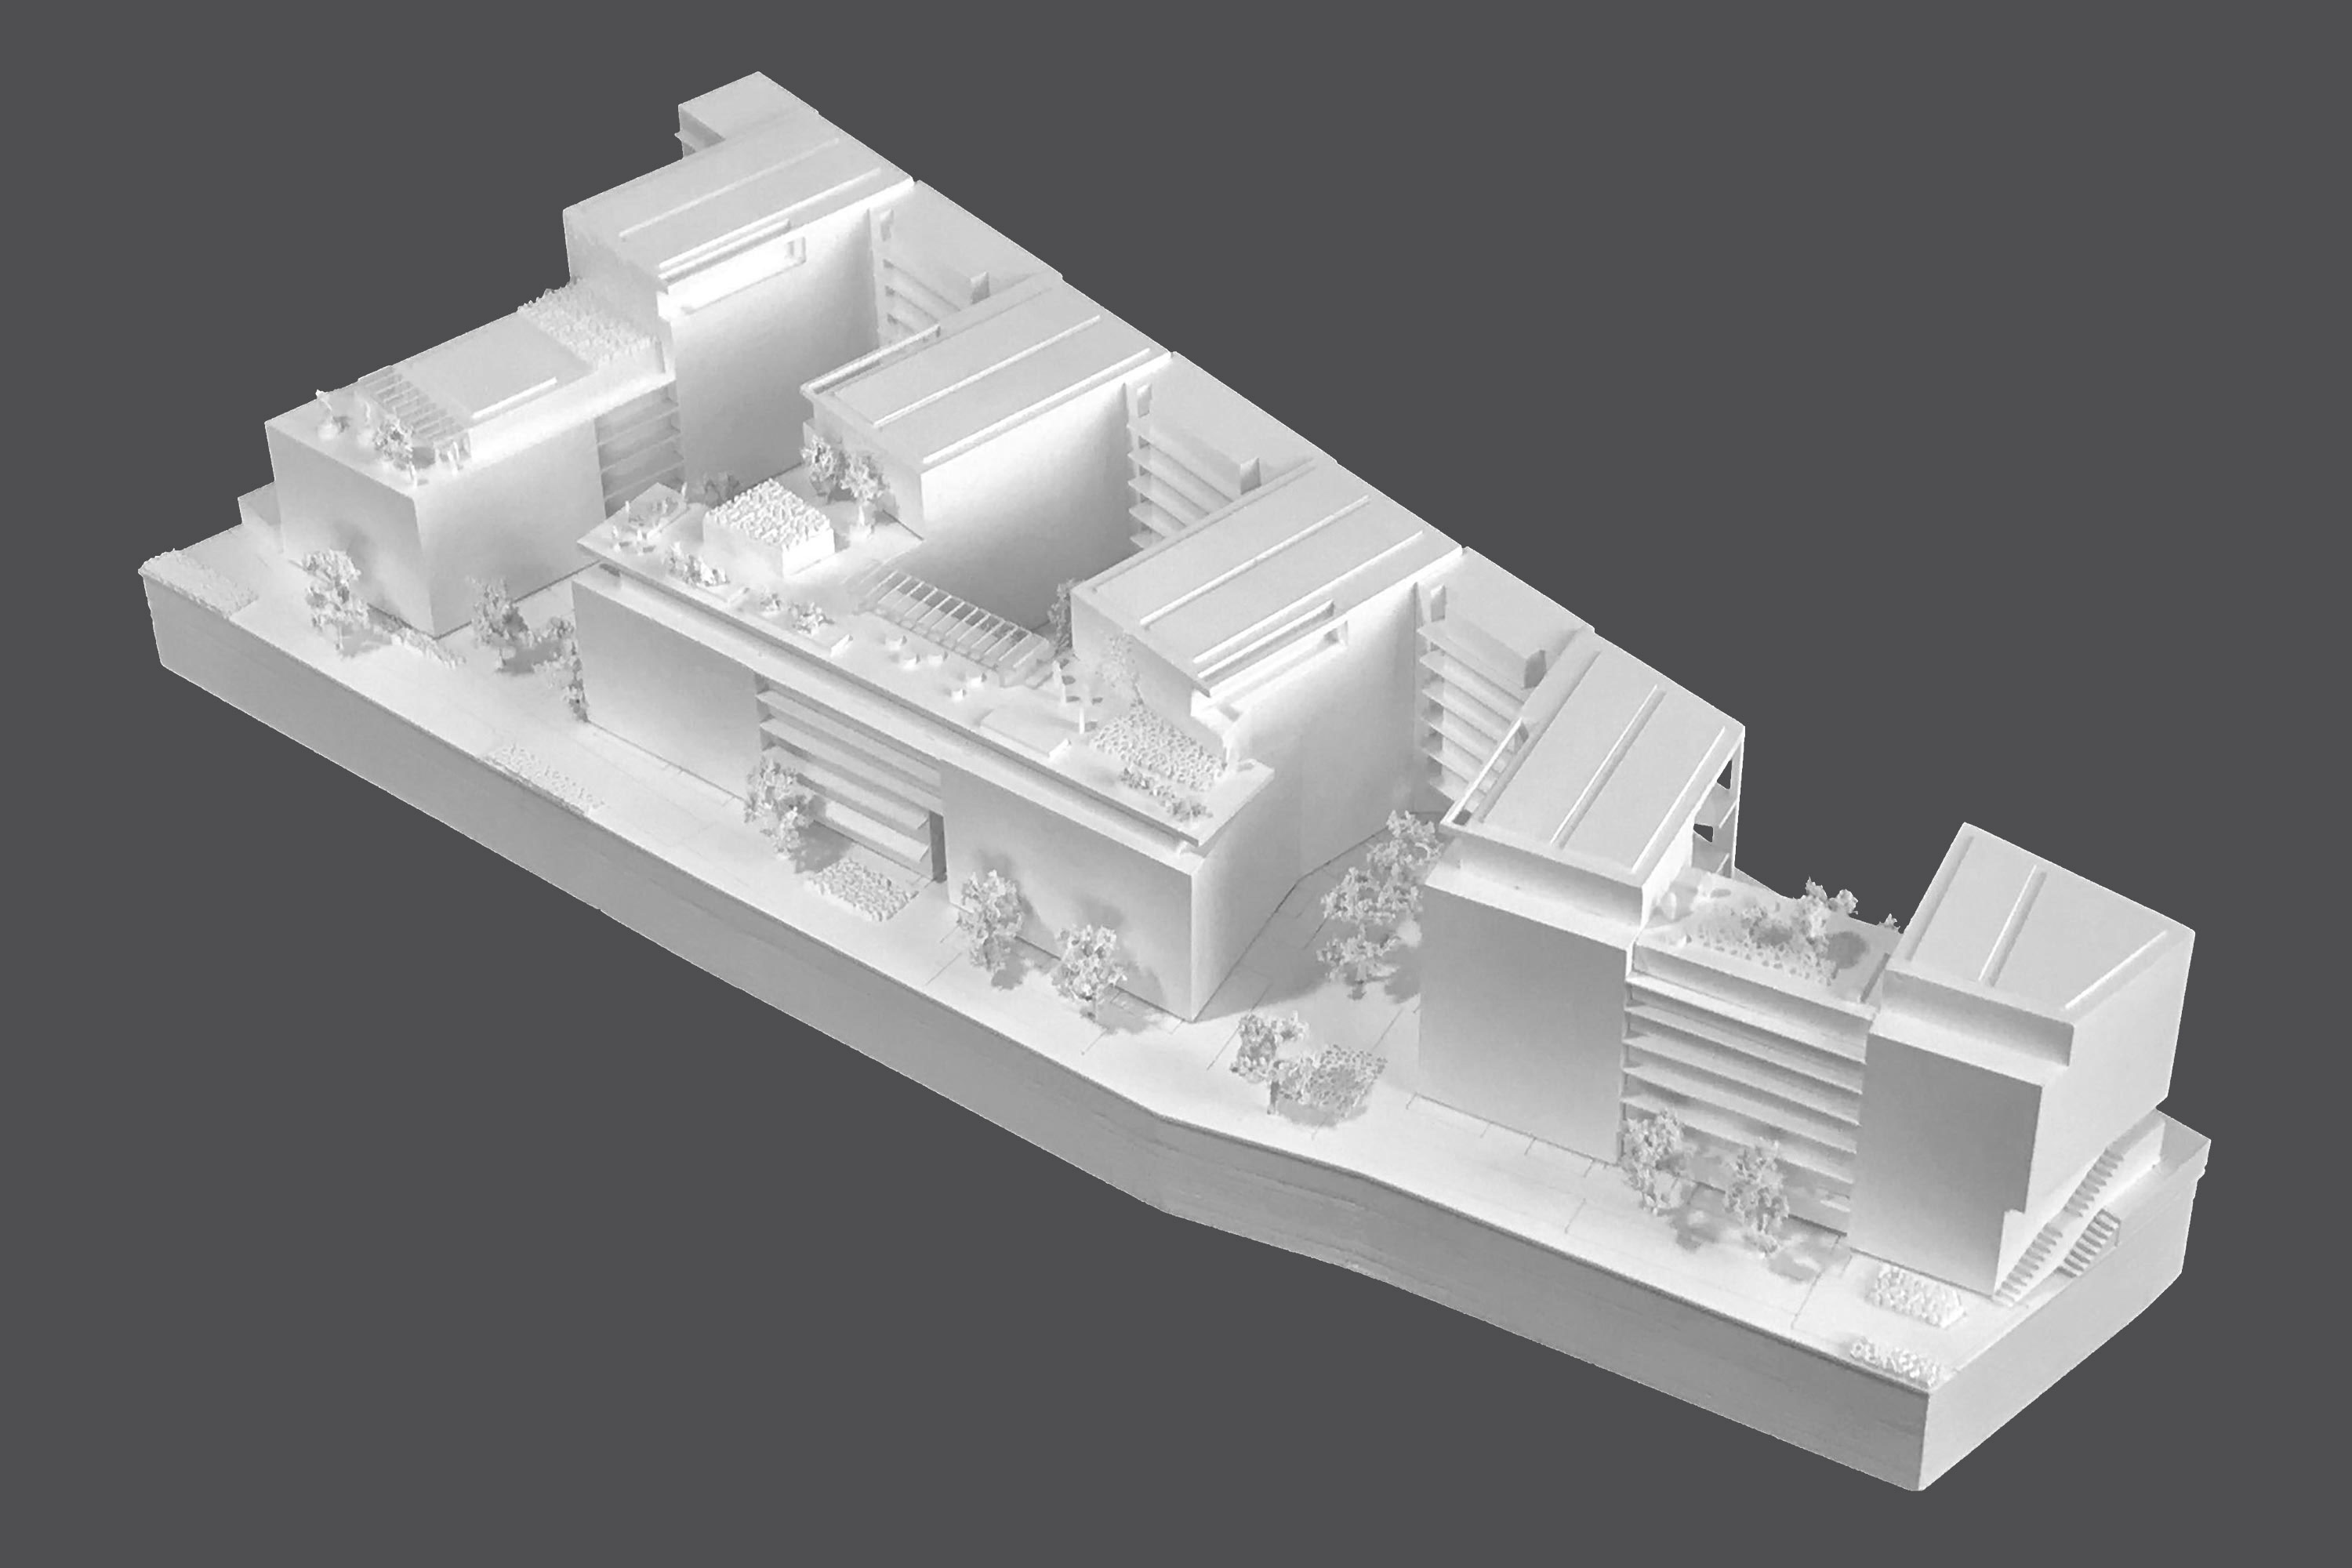 Housing Käthe-Dorsch-Gasse, Model. Berger+Parkkinen Architekten | Christoph Lechner & Partner